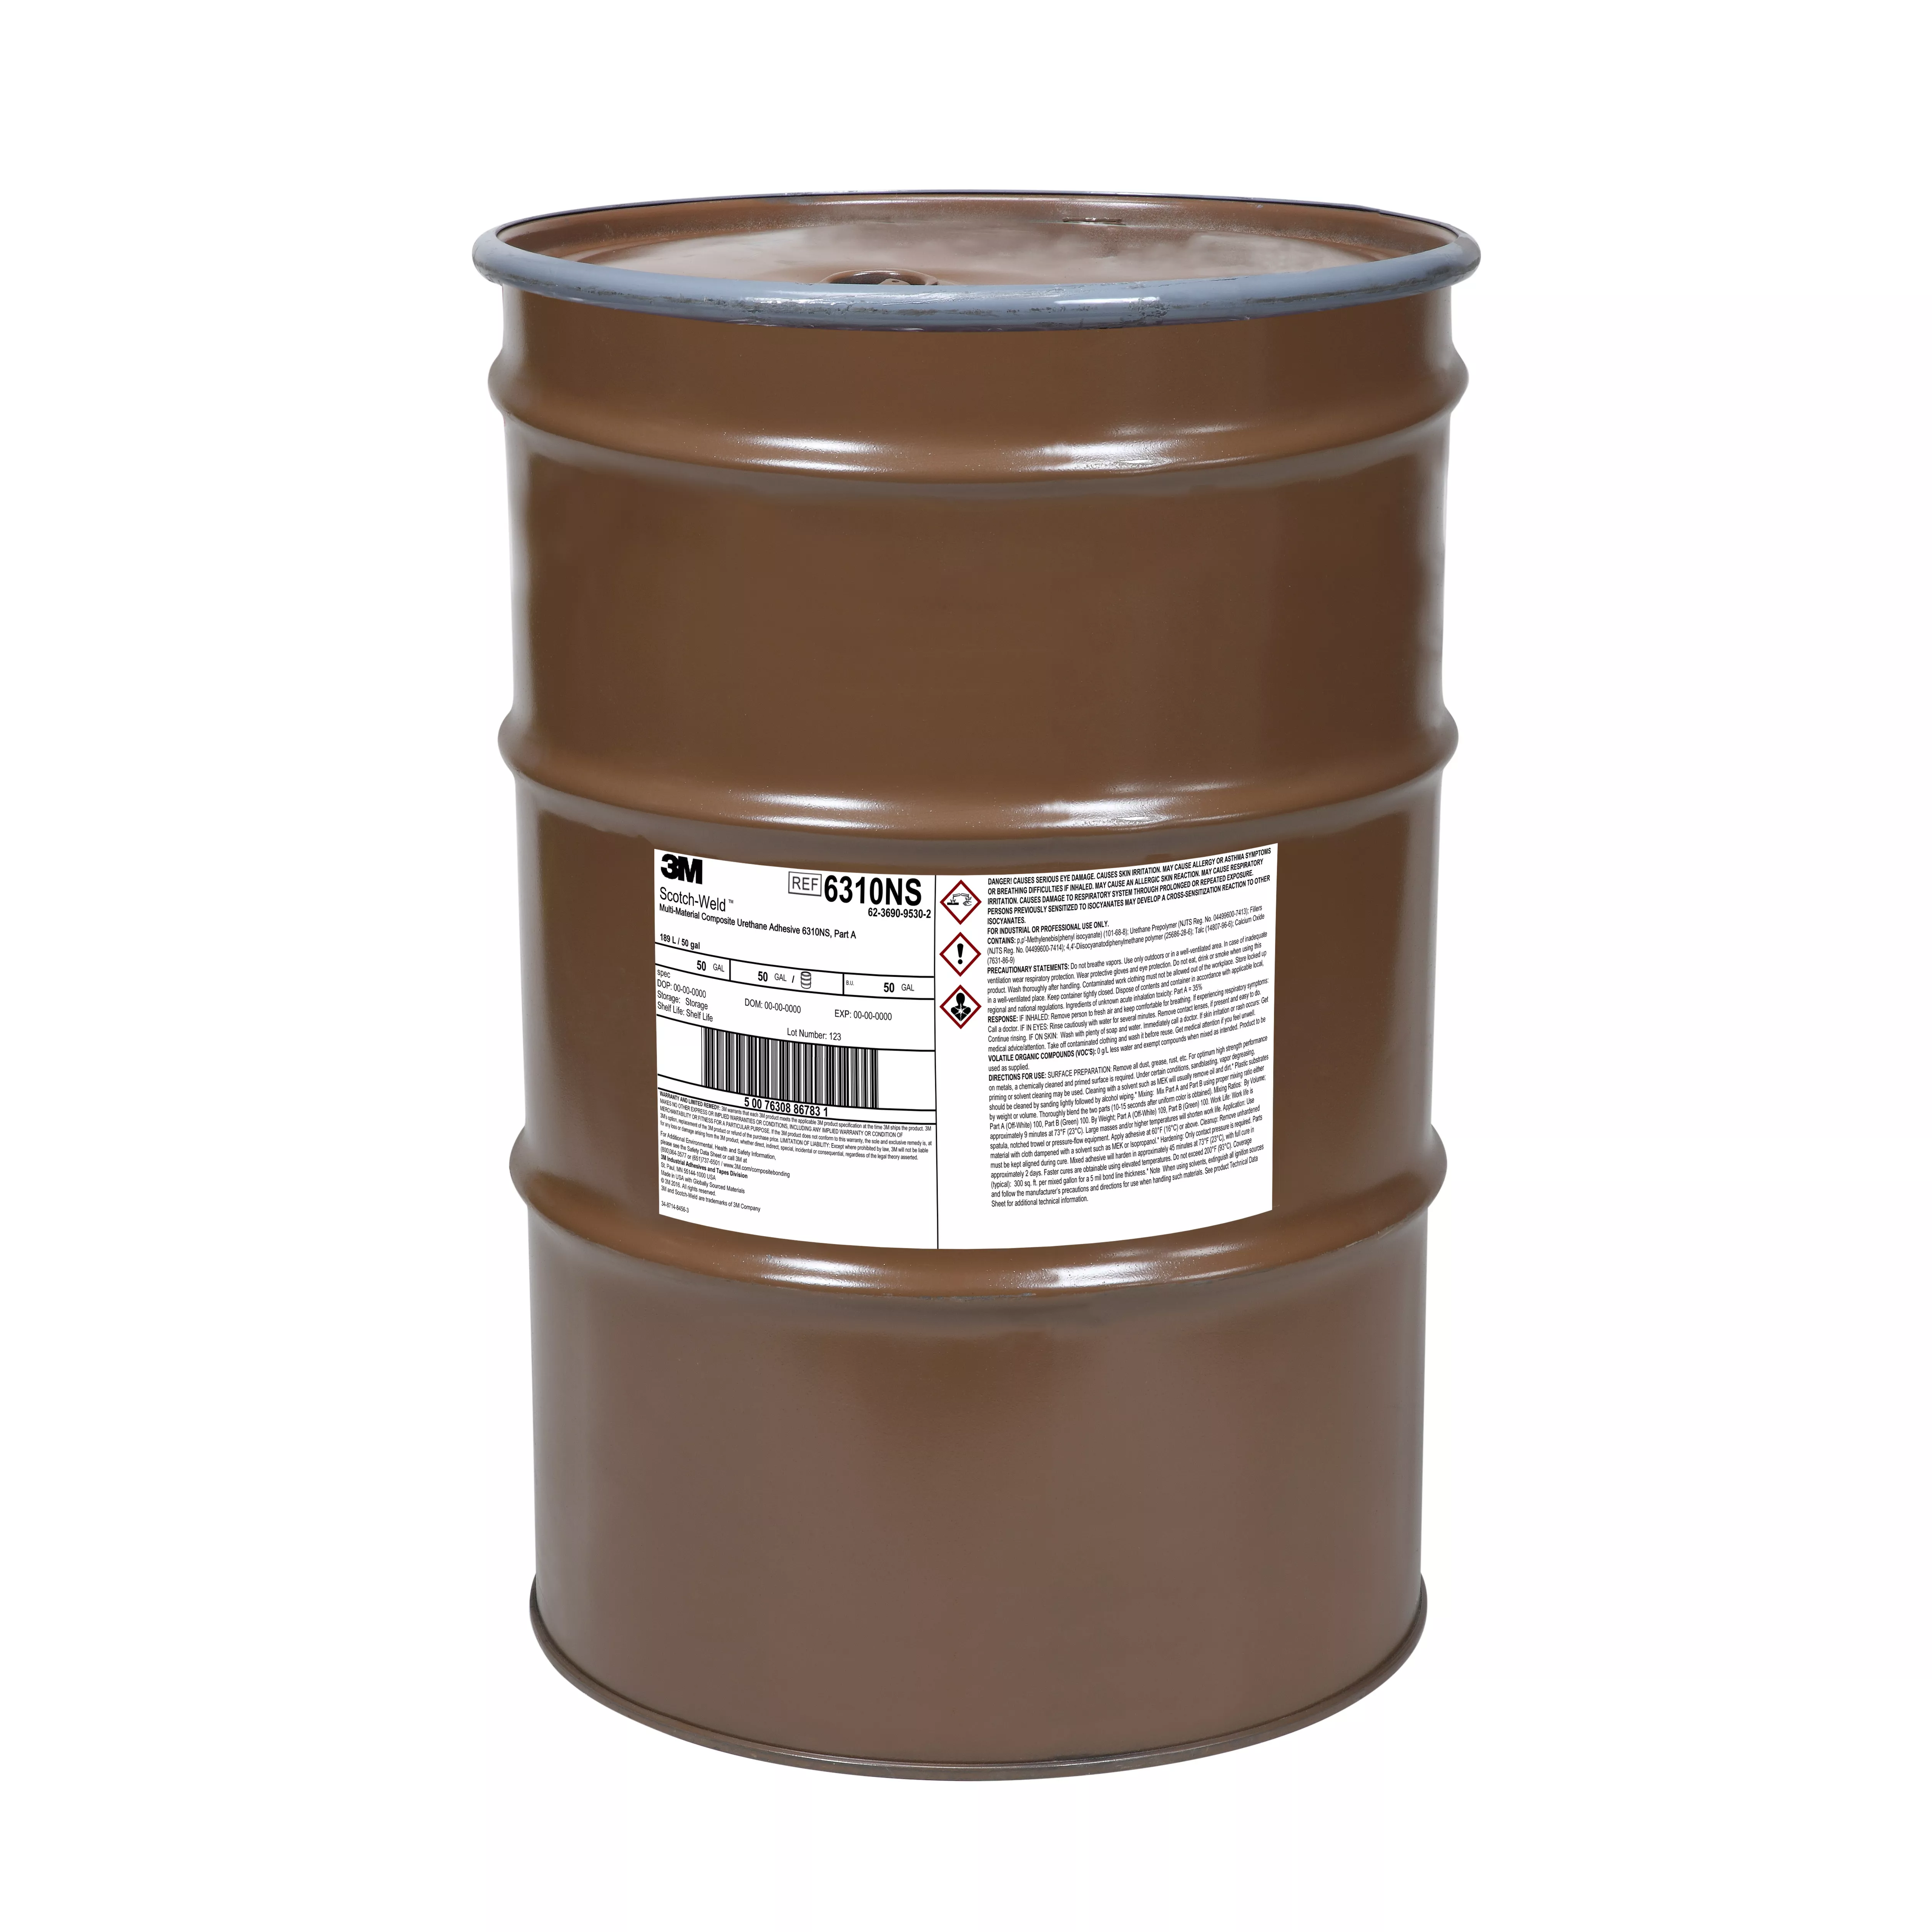 3M™ Scotch-Weld™ Multi-Material Composite Urethane Adhesive 6310NS,
Green, Part A, 55 Gallon (50 Gallon Net), Drum